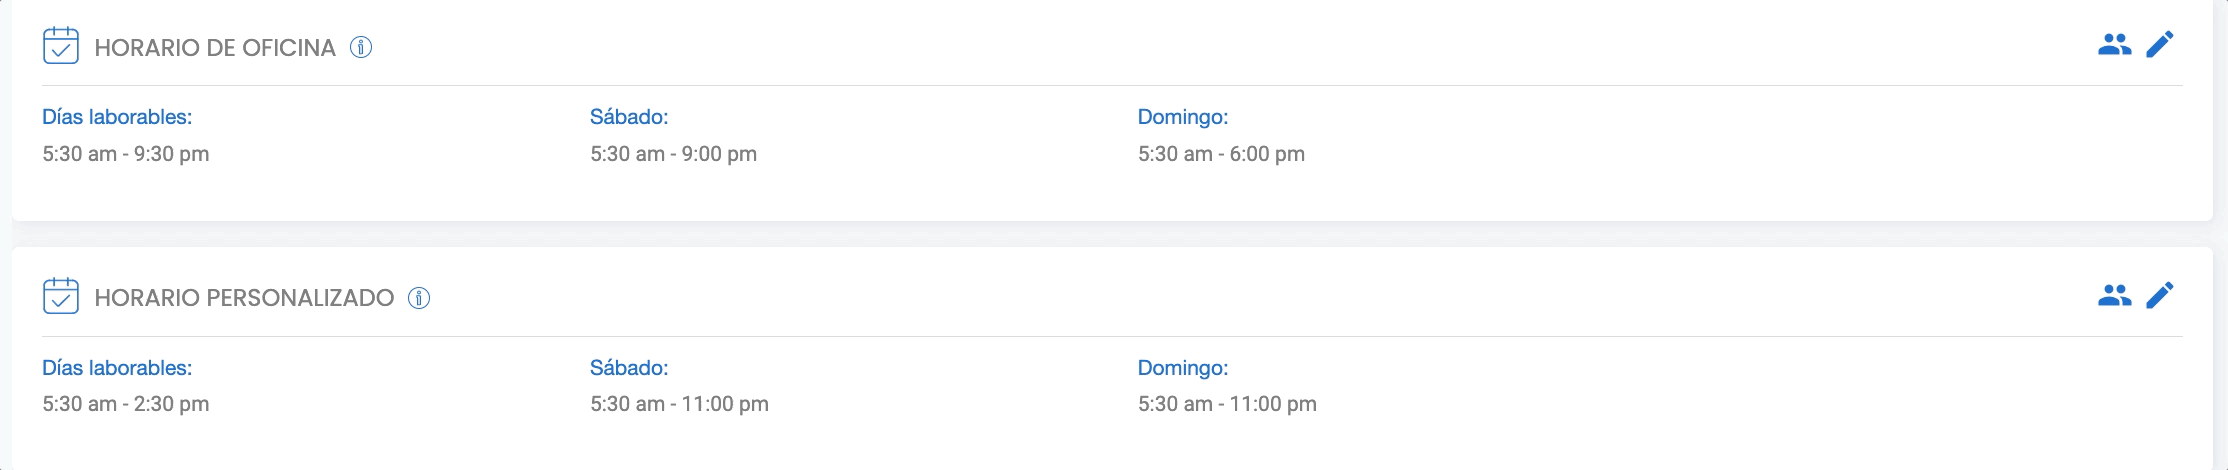 Spanish change hours